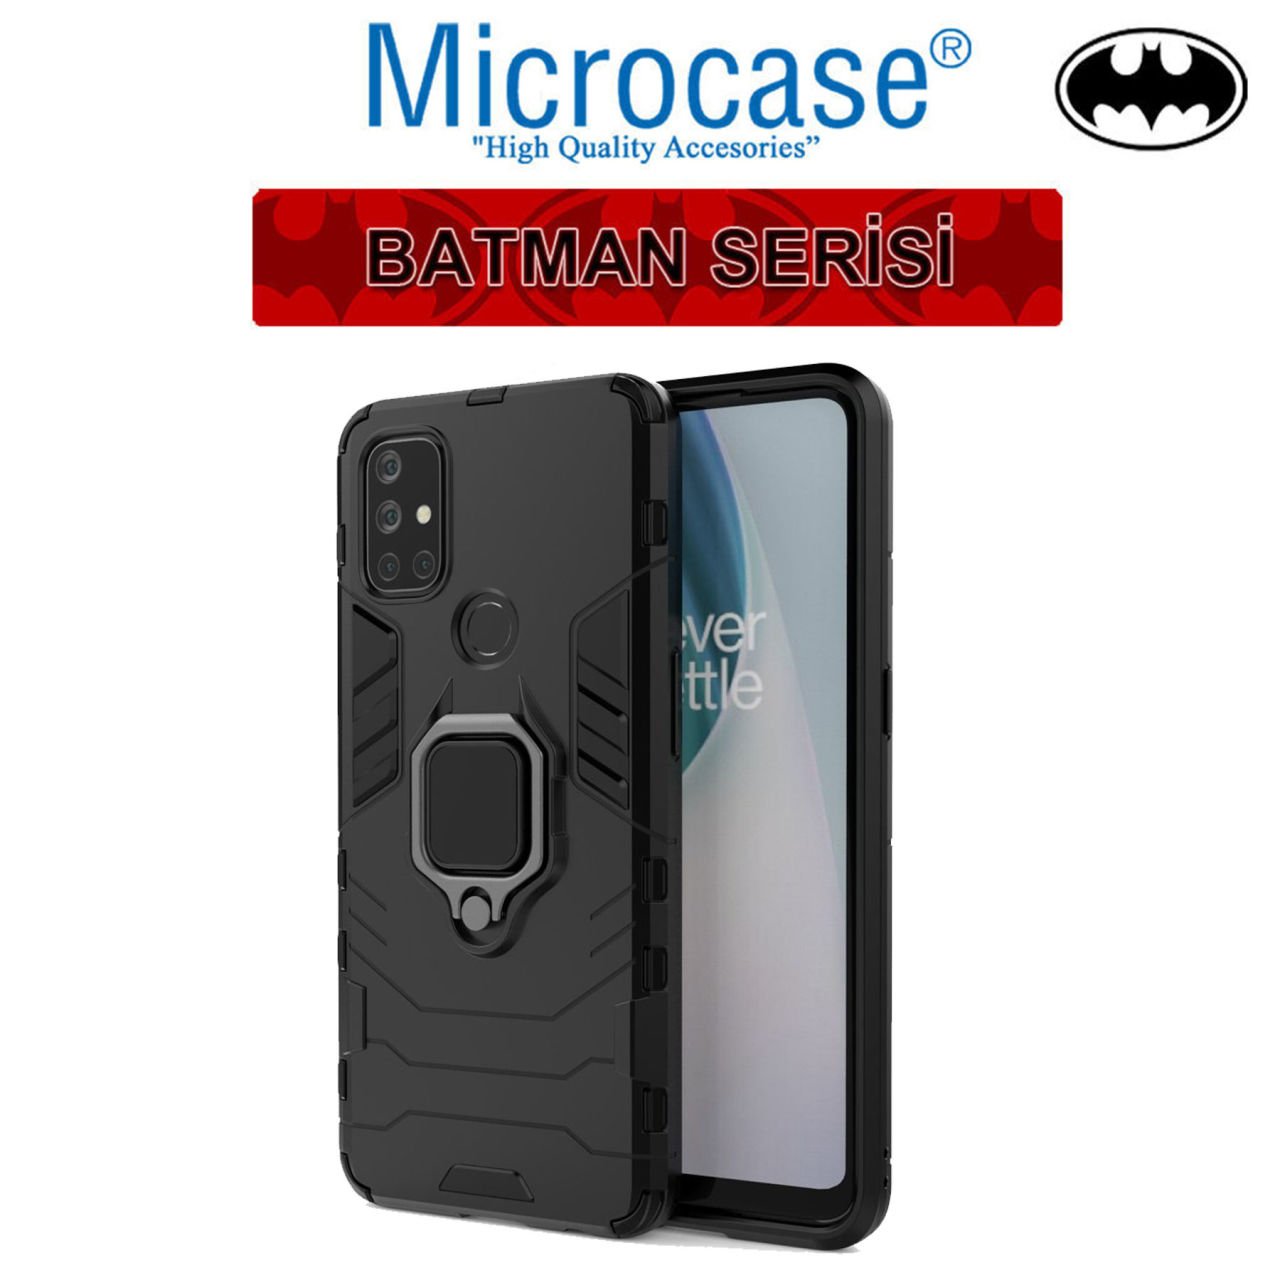 Microcase Oneplus Nord N100 Batman Serisi Yüzük Standlı Armor Kılıf - Siyah